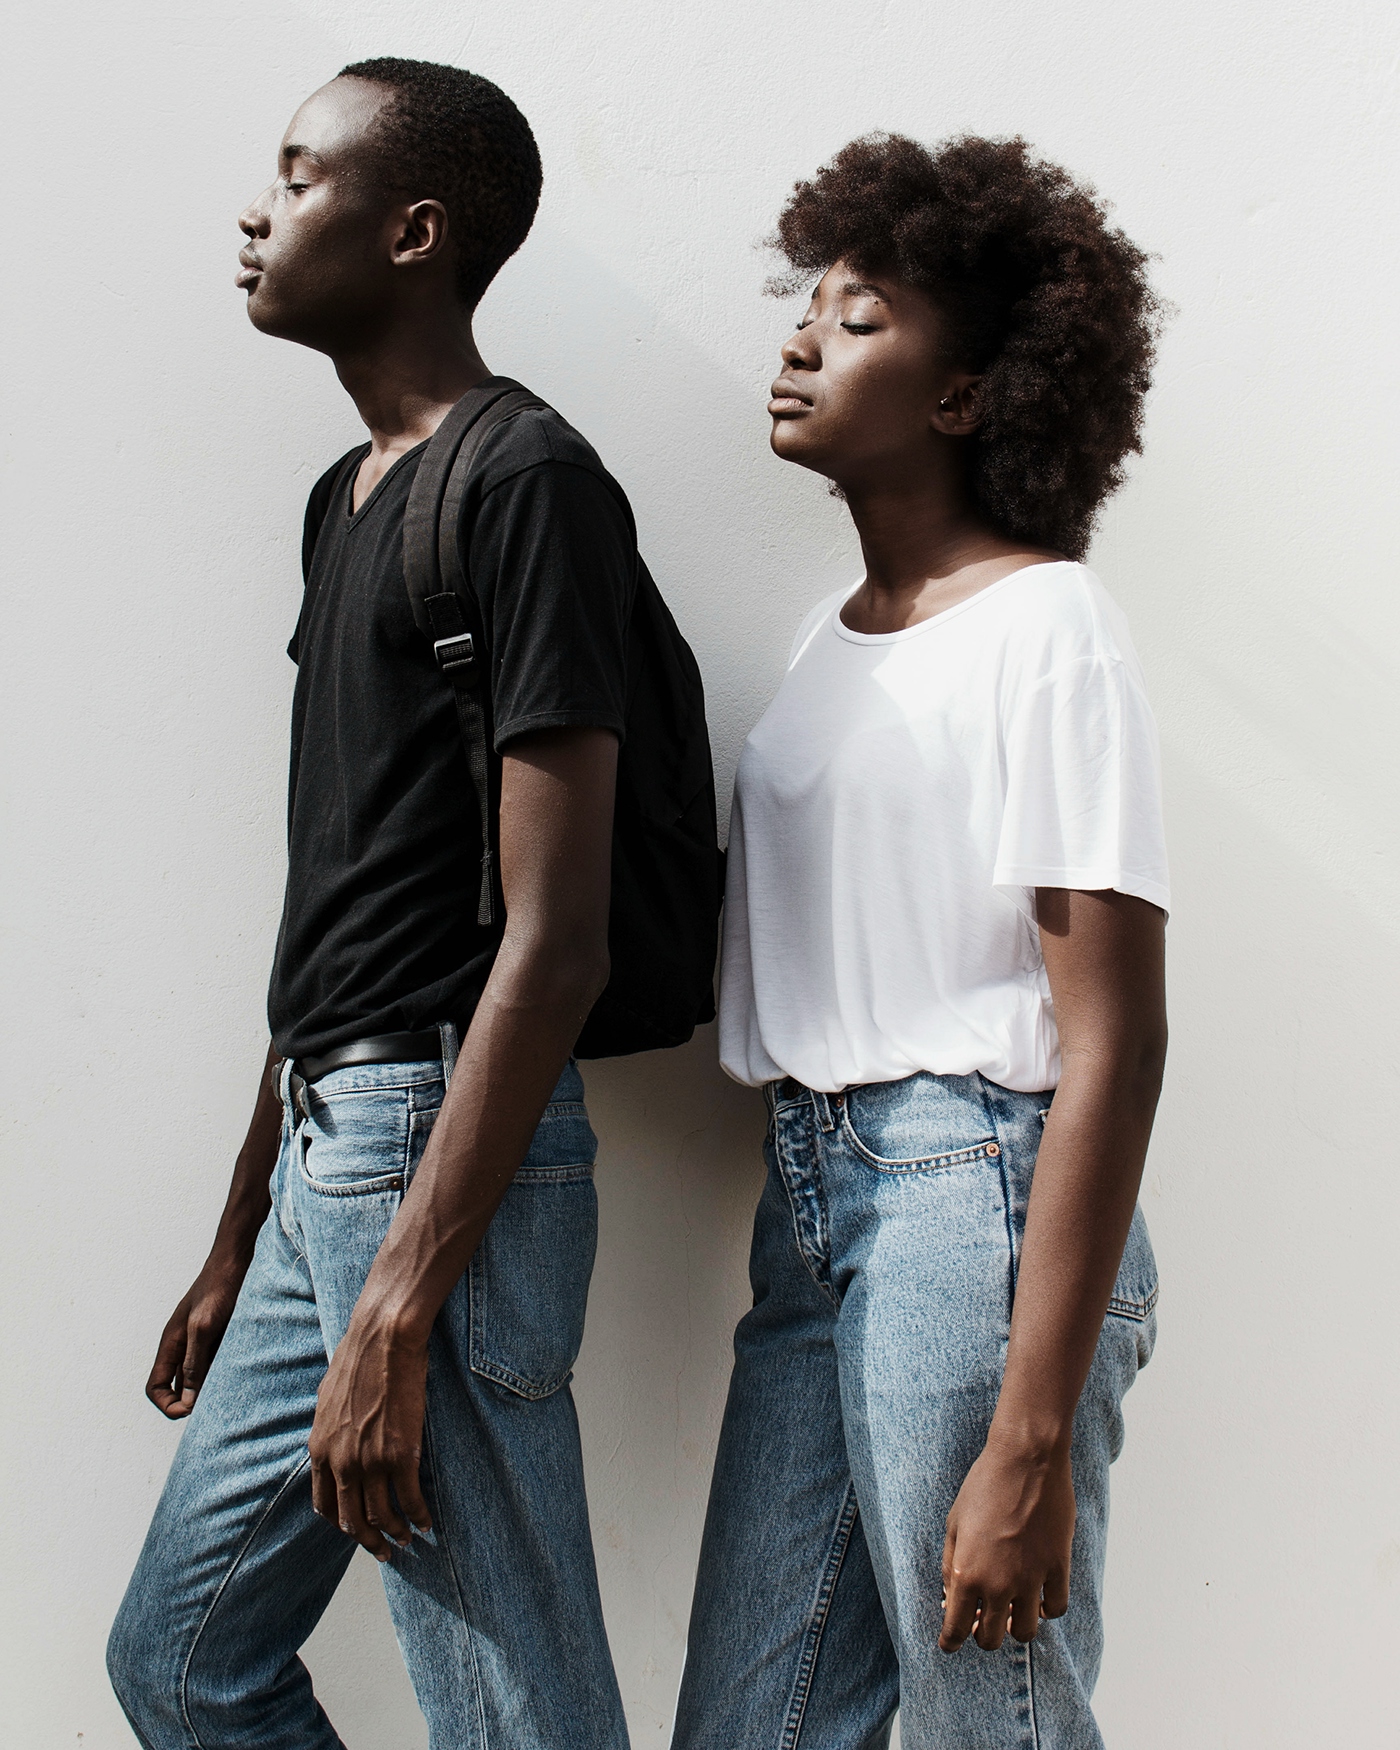 conceptual conceptual photography portrait Denim duo african african woman African man